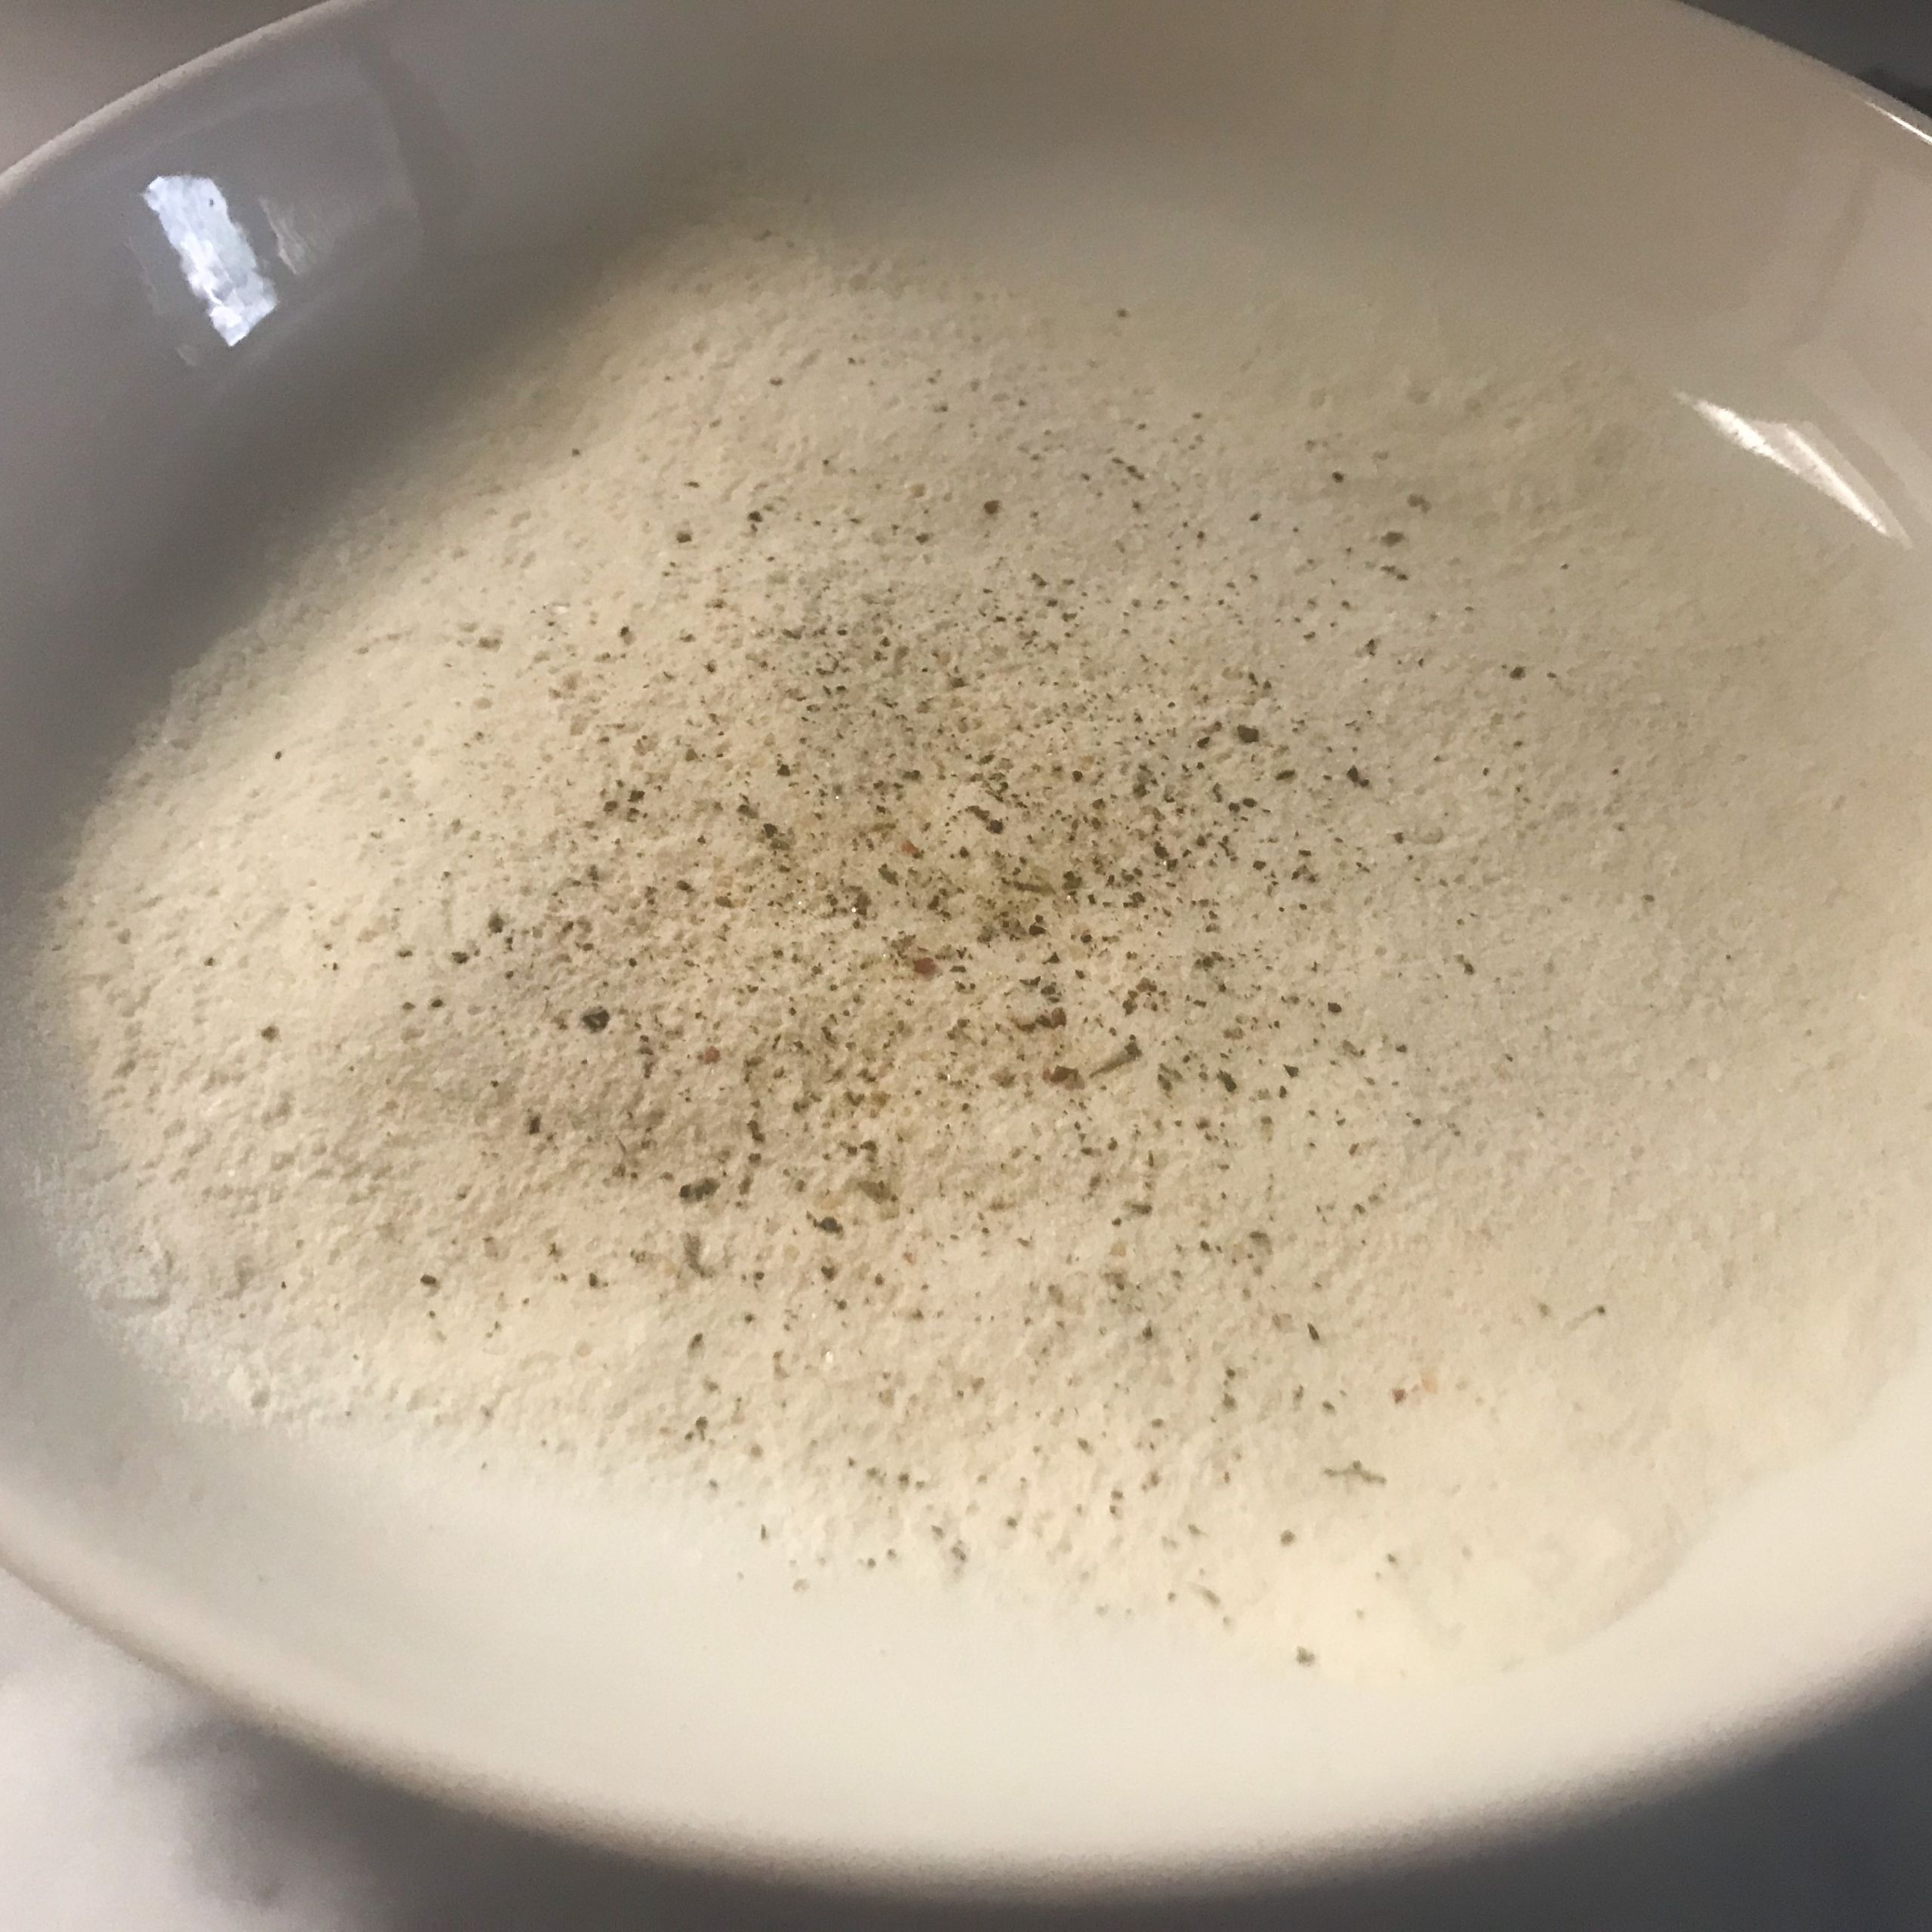 wondra flour, salt and pepper in a bowl